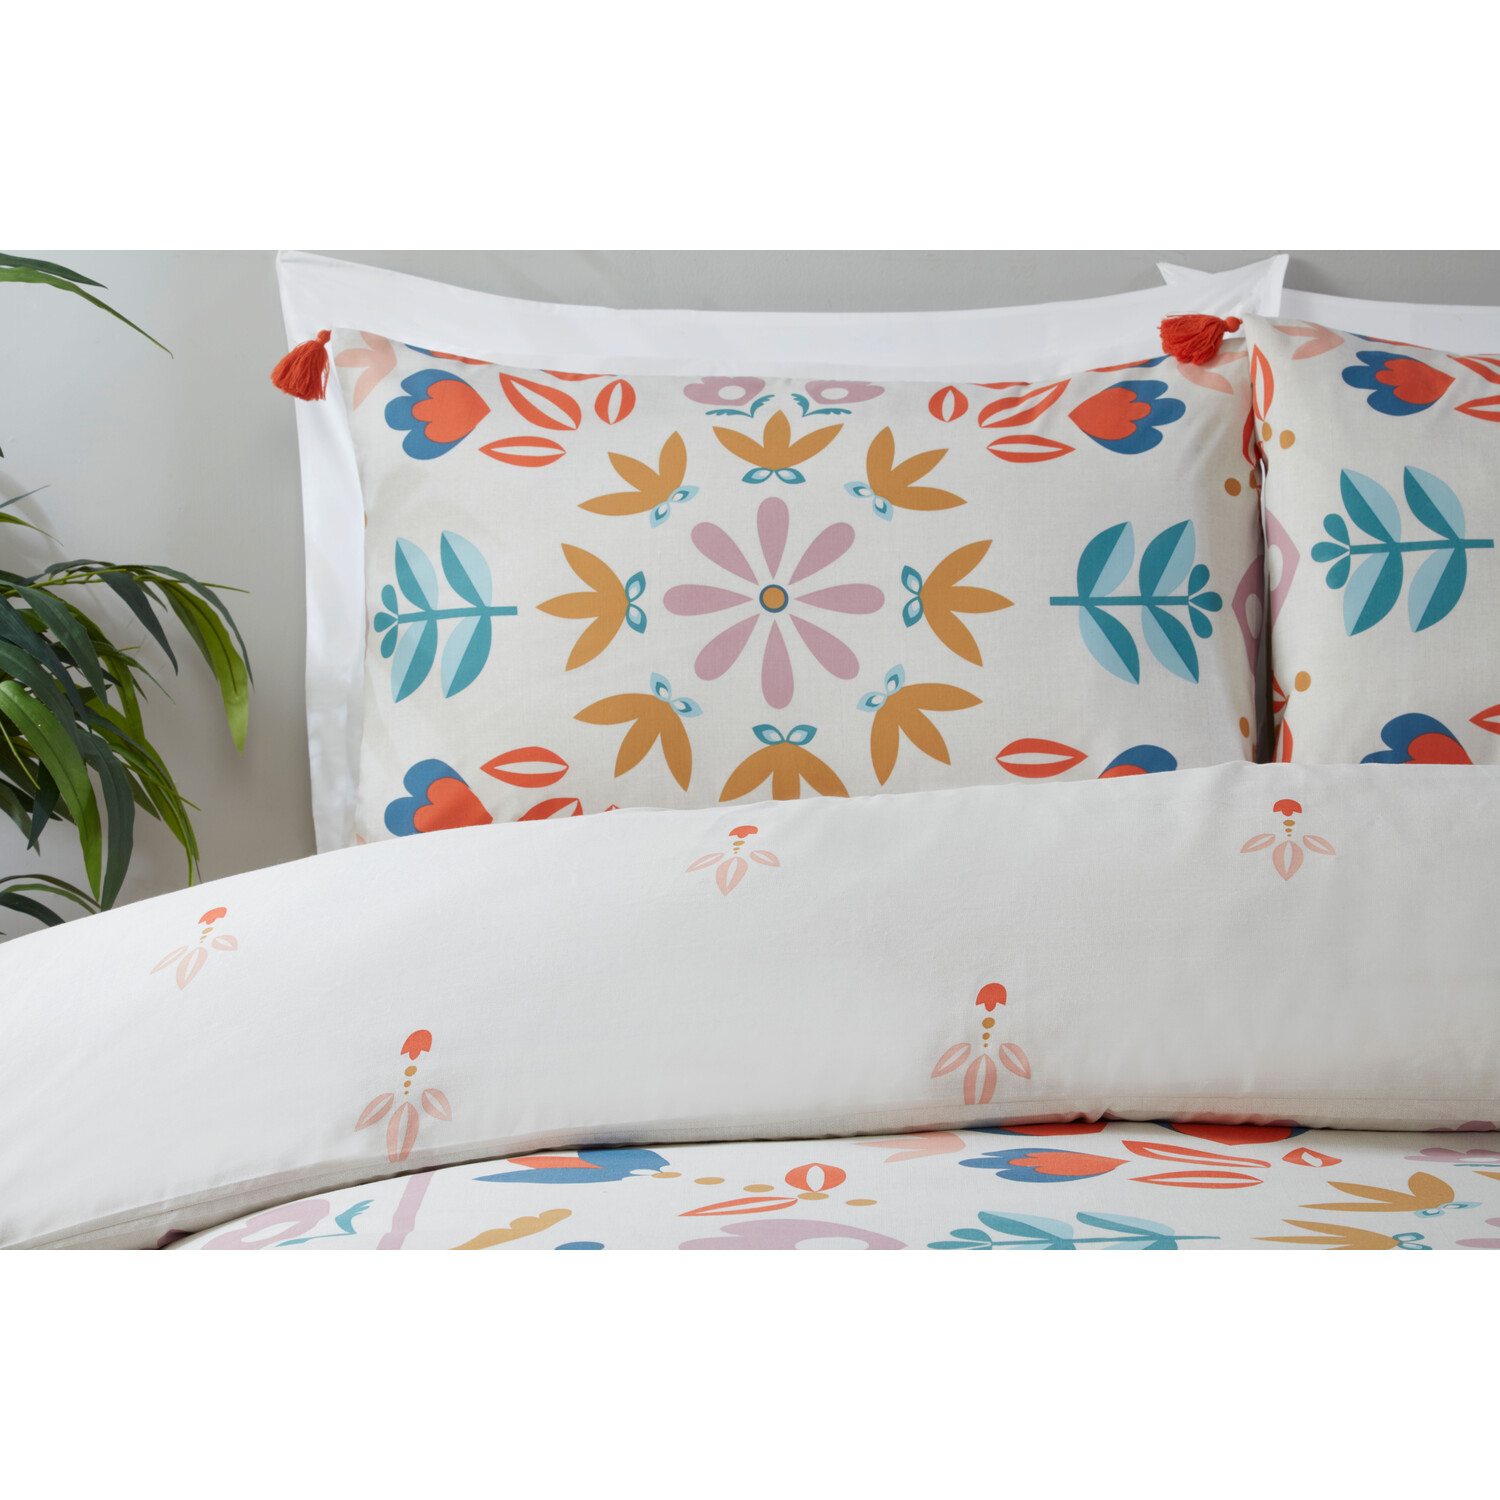 Amari Floral Duvet Cover and Pillowcase Set - Superking Image 3